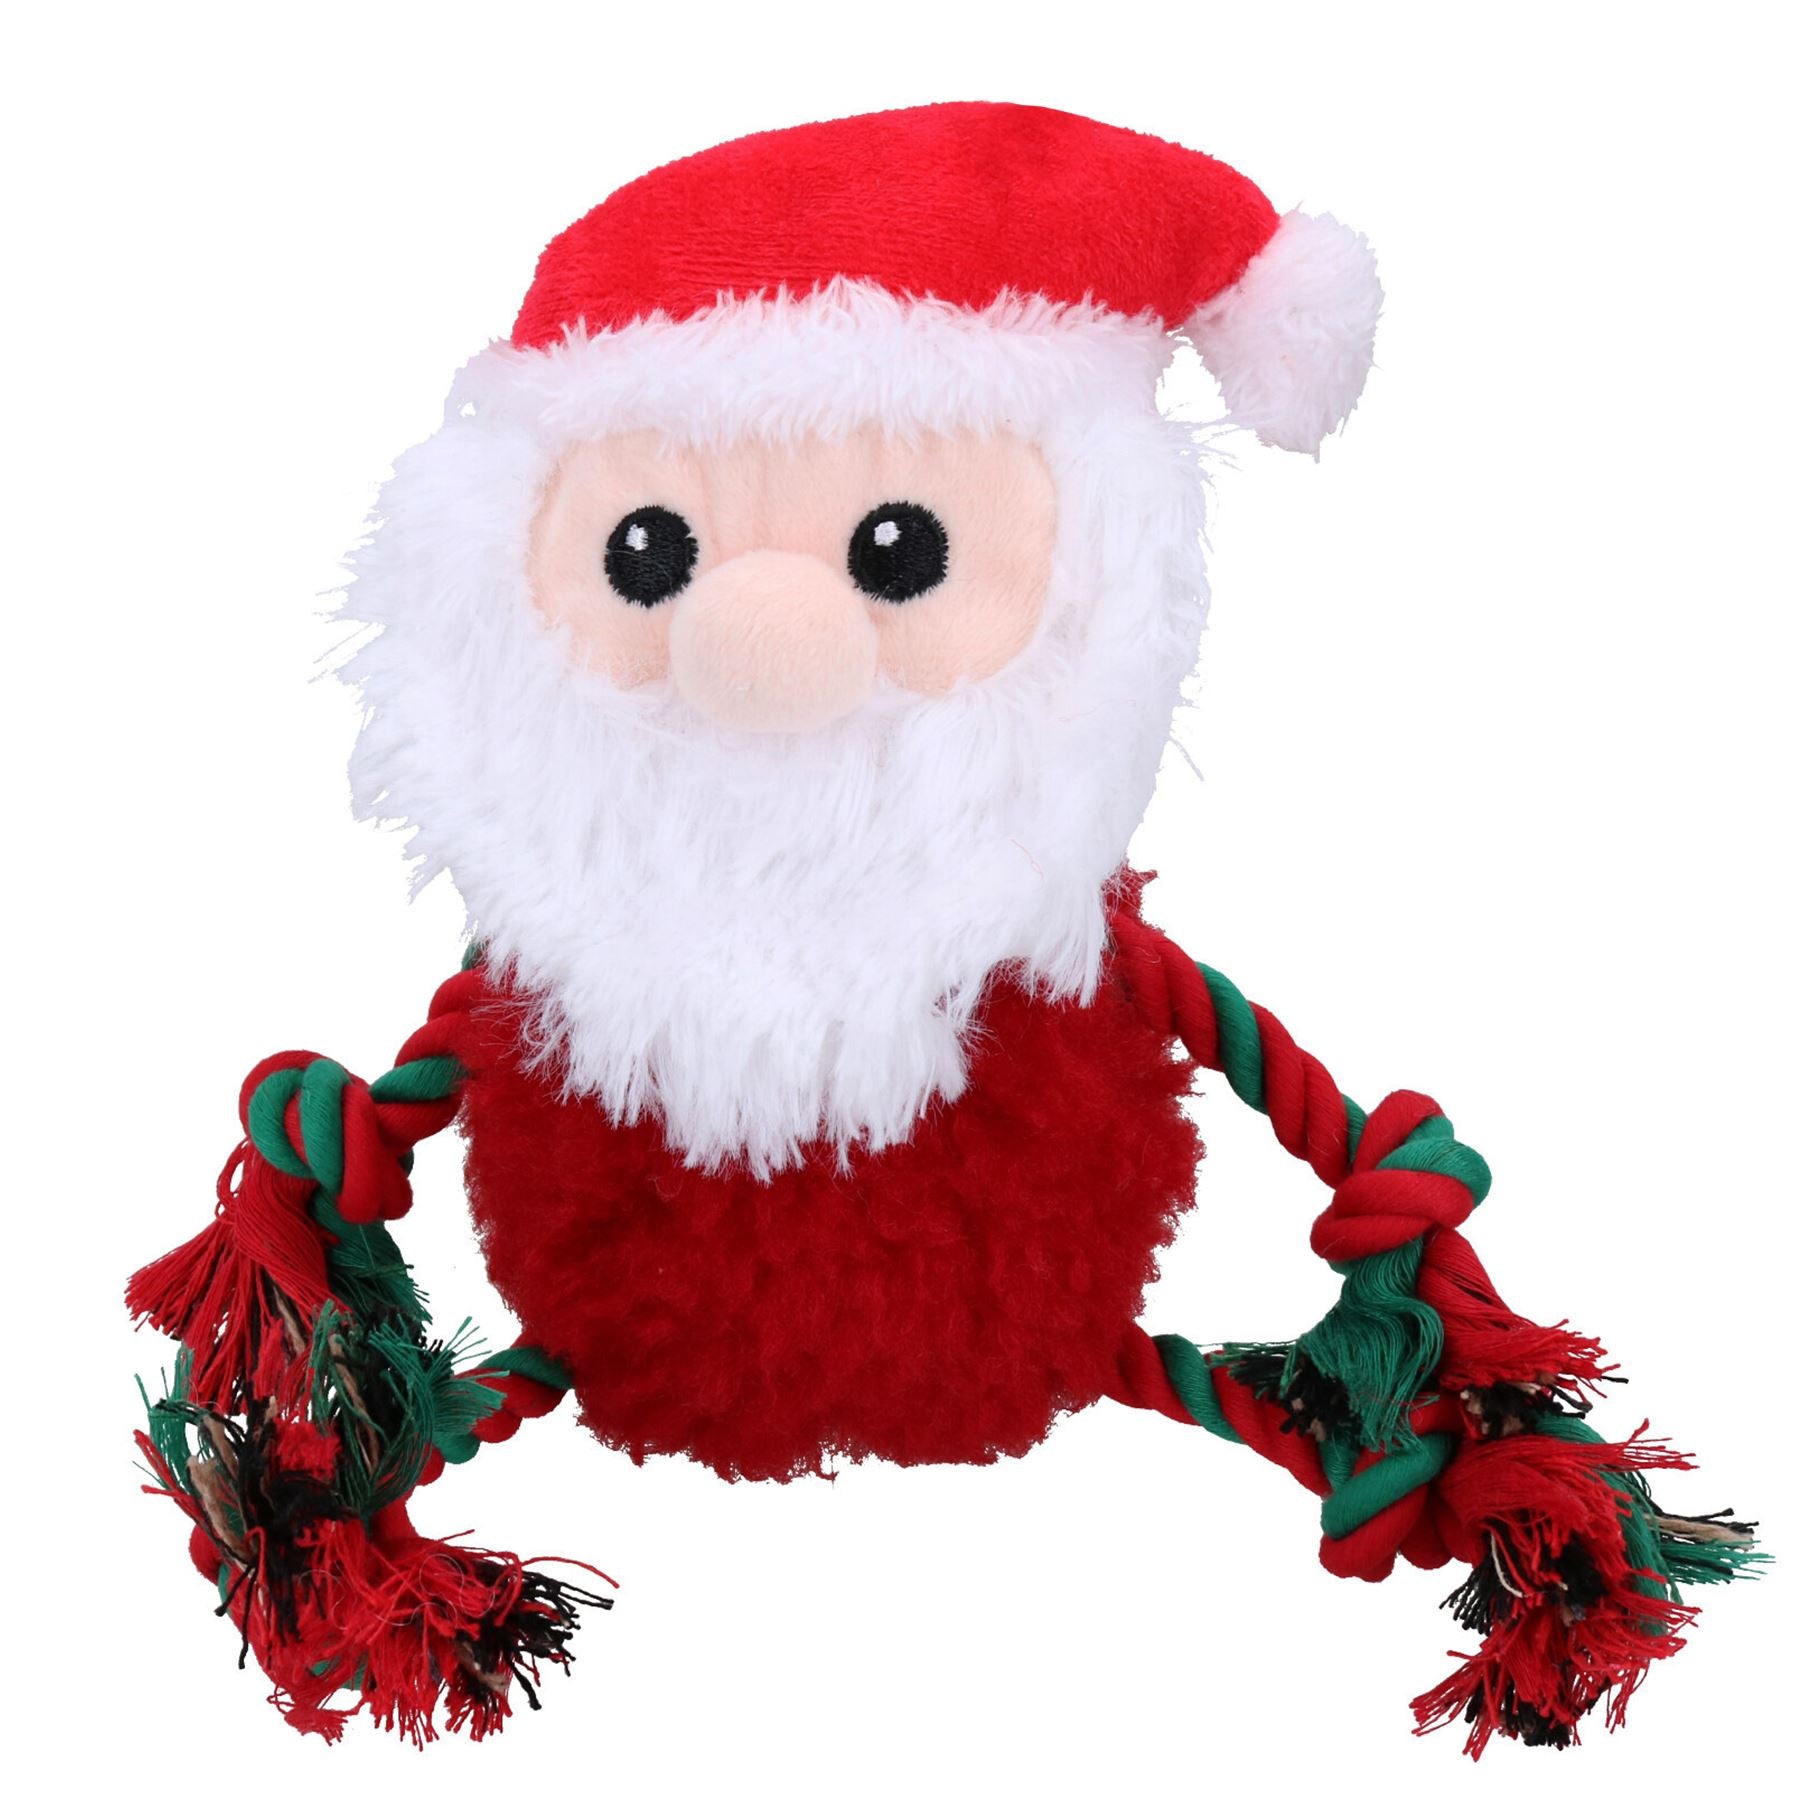 Dog Christmas Gift Fluffy Ropee Reindeer & Santa Squeaky Plush RopeToy Bundle